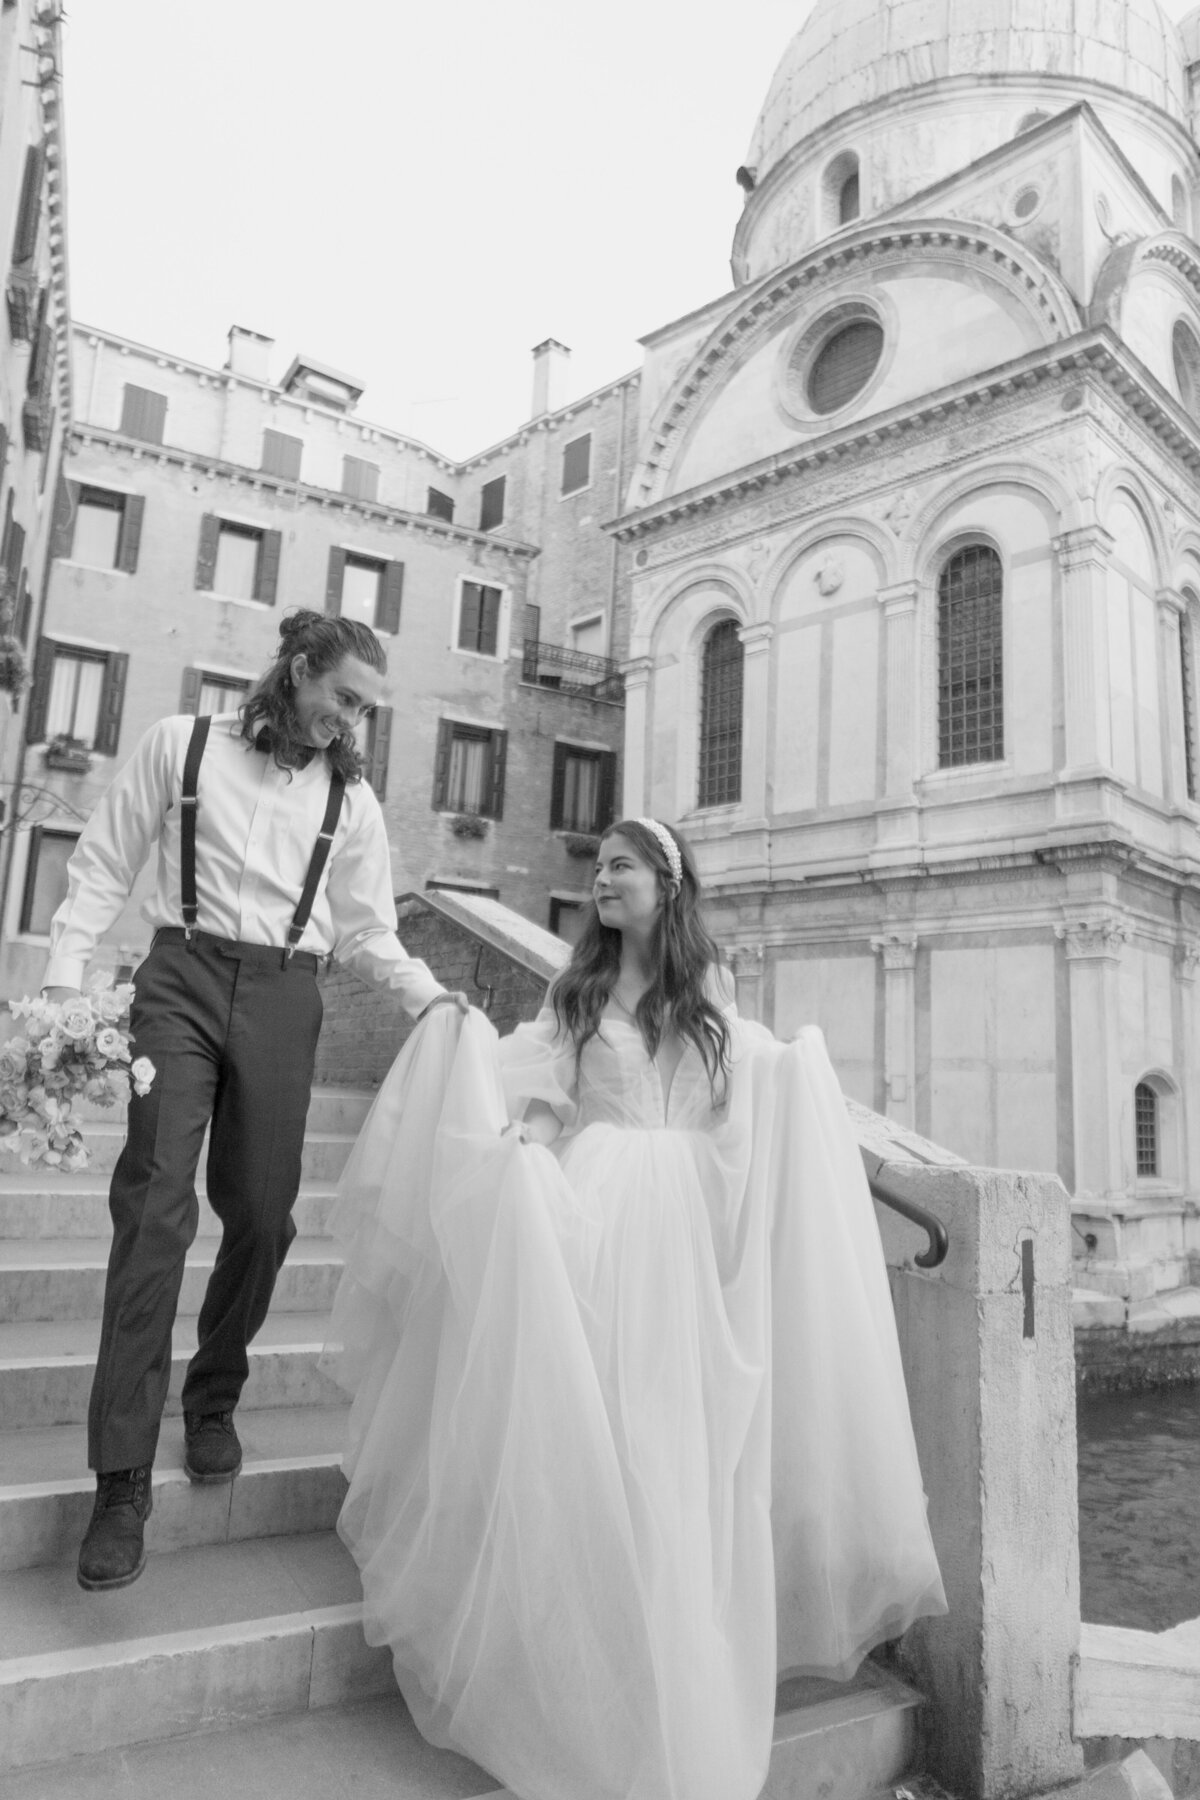 -Documentary-Style-Editorial-Vogue-gondola-Italy-Destination-Wedding-Leah-Gunn-PhotographyDocumentary-Style-Editorial-Vogue-gondola-Italy-Destination-Wedding-Leah-Gunn-Photography-10